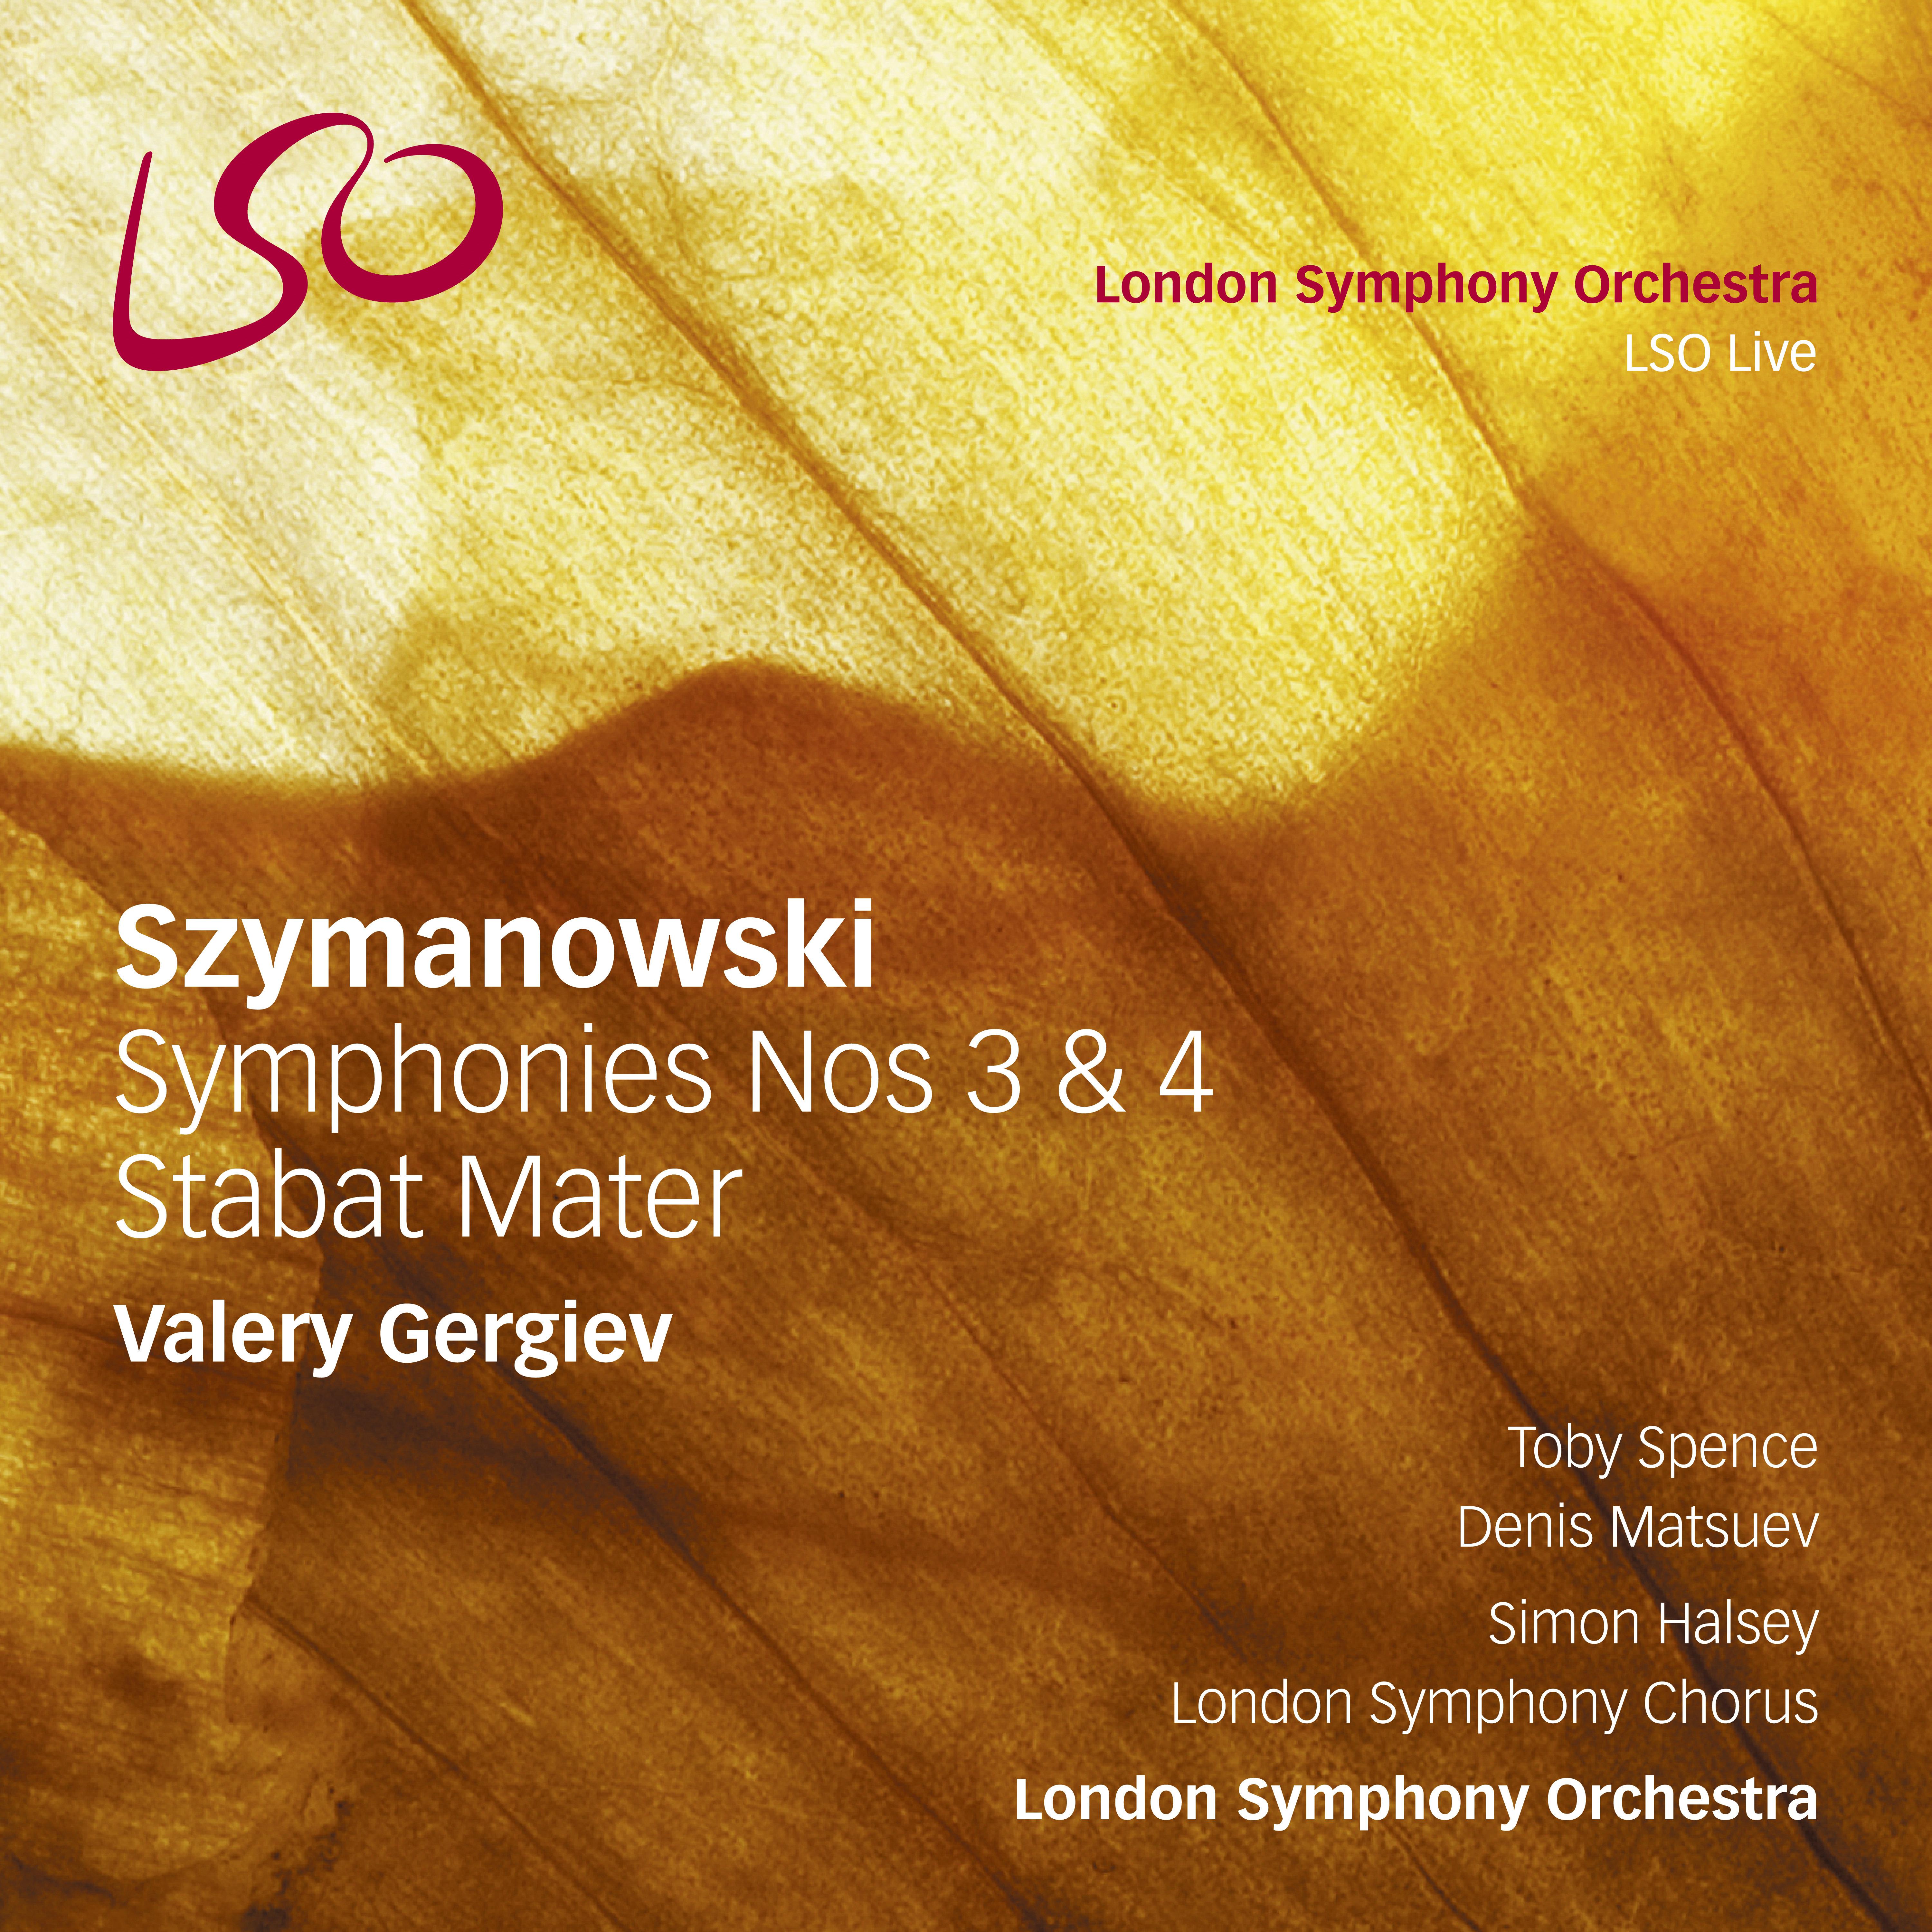 London Symphony Orchestra - Stabat Mater, Op. 53: III. O, Eia, Mater, fons amoris